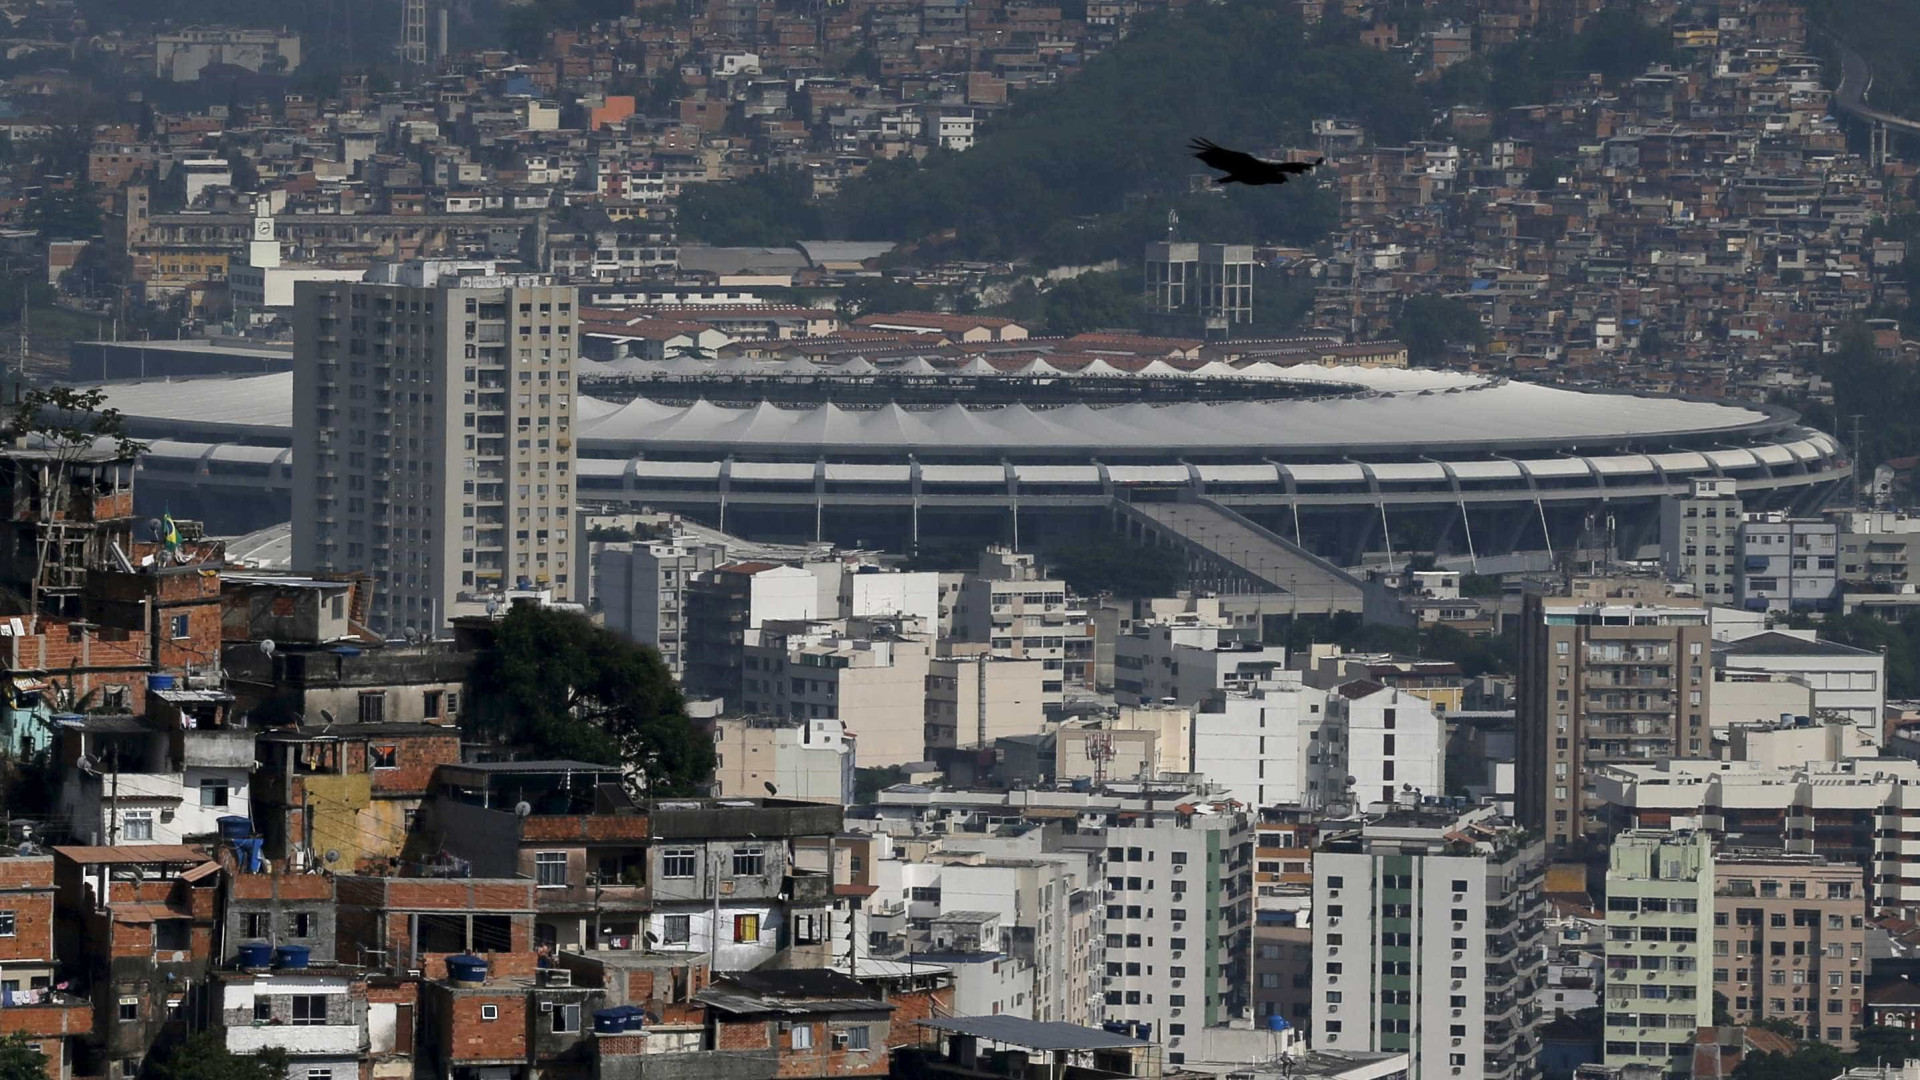 Suspeita de bomba interdita via no entorno do 
Maracanã, no Rio